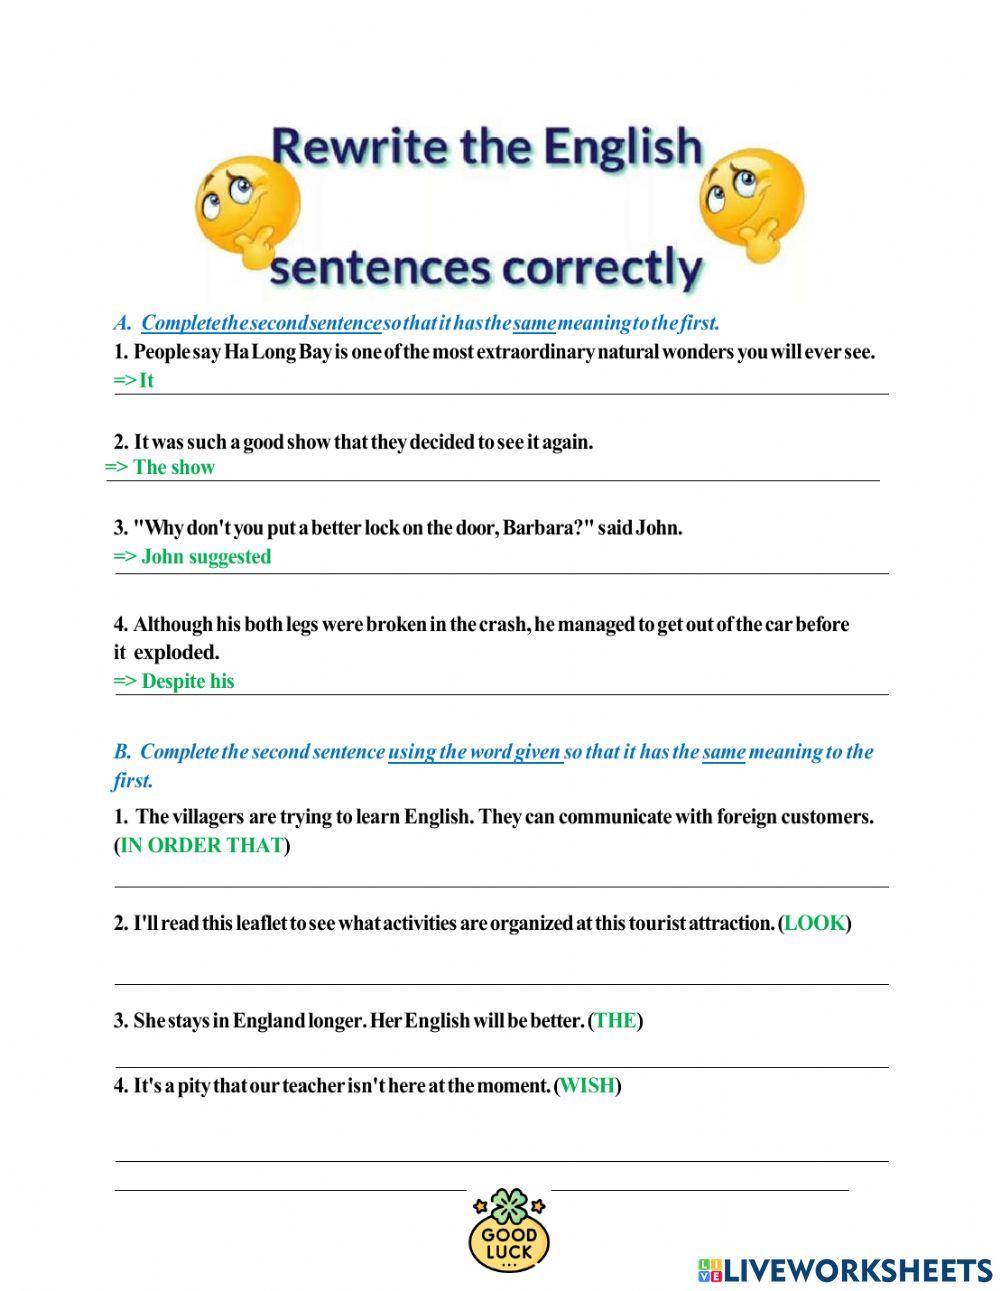 Rewrite sentences 1